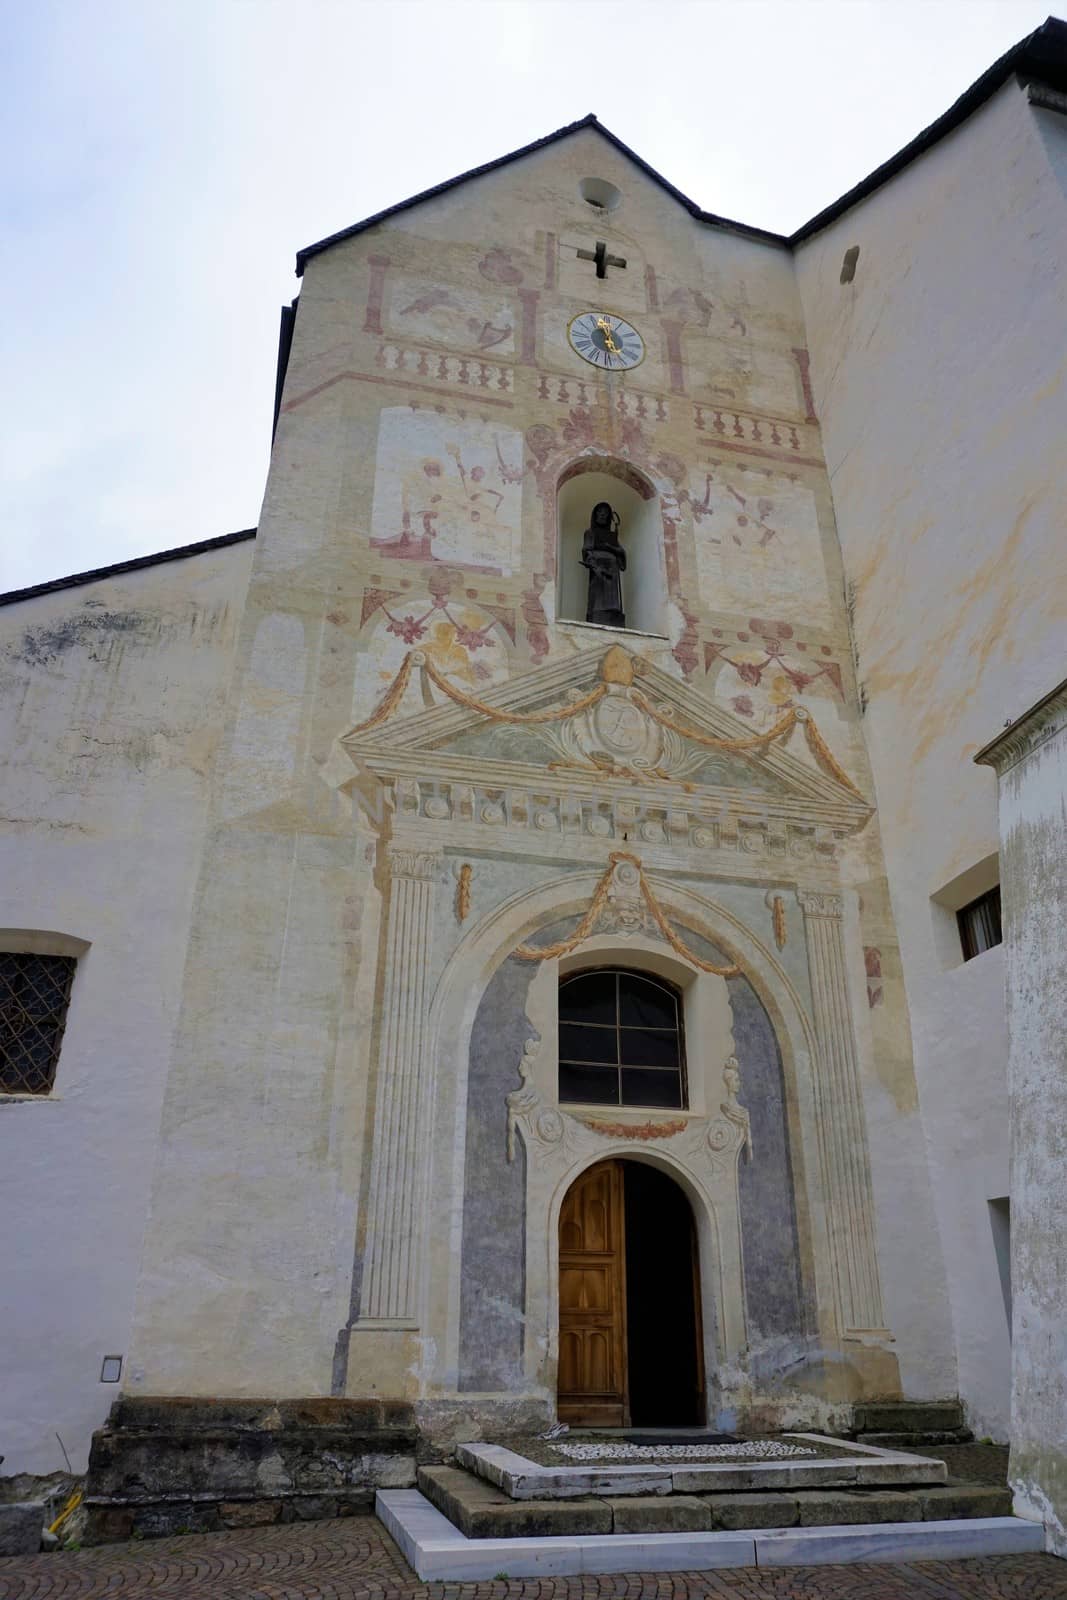 Marienberg Abbey in beautiful Vinschgau, South Tyrol, Italy